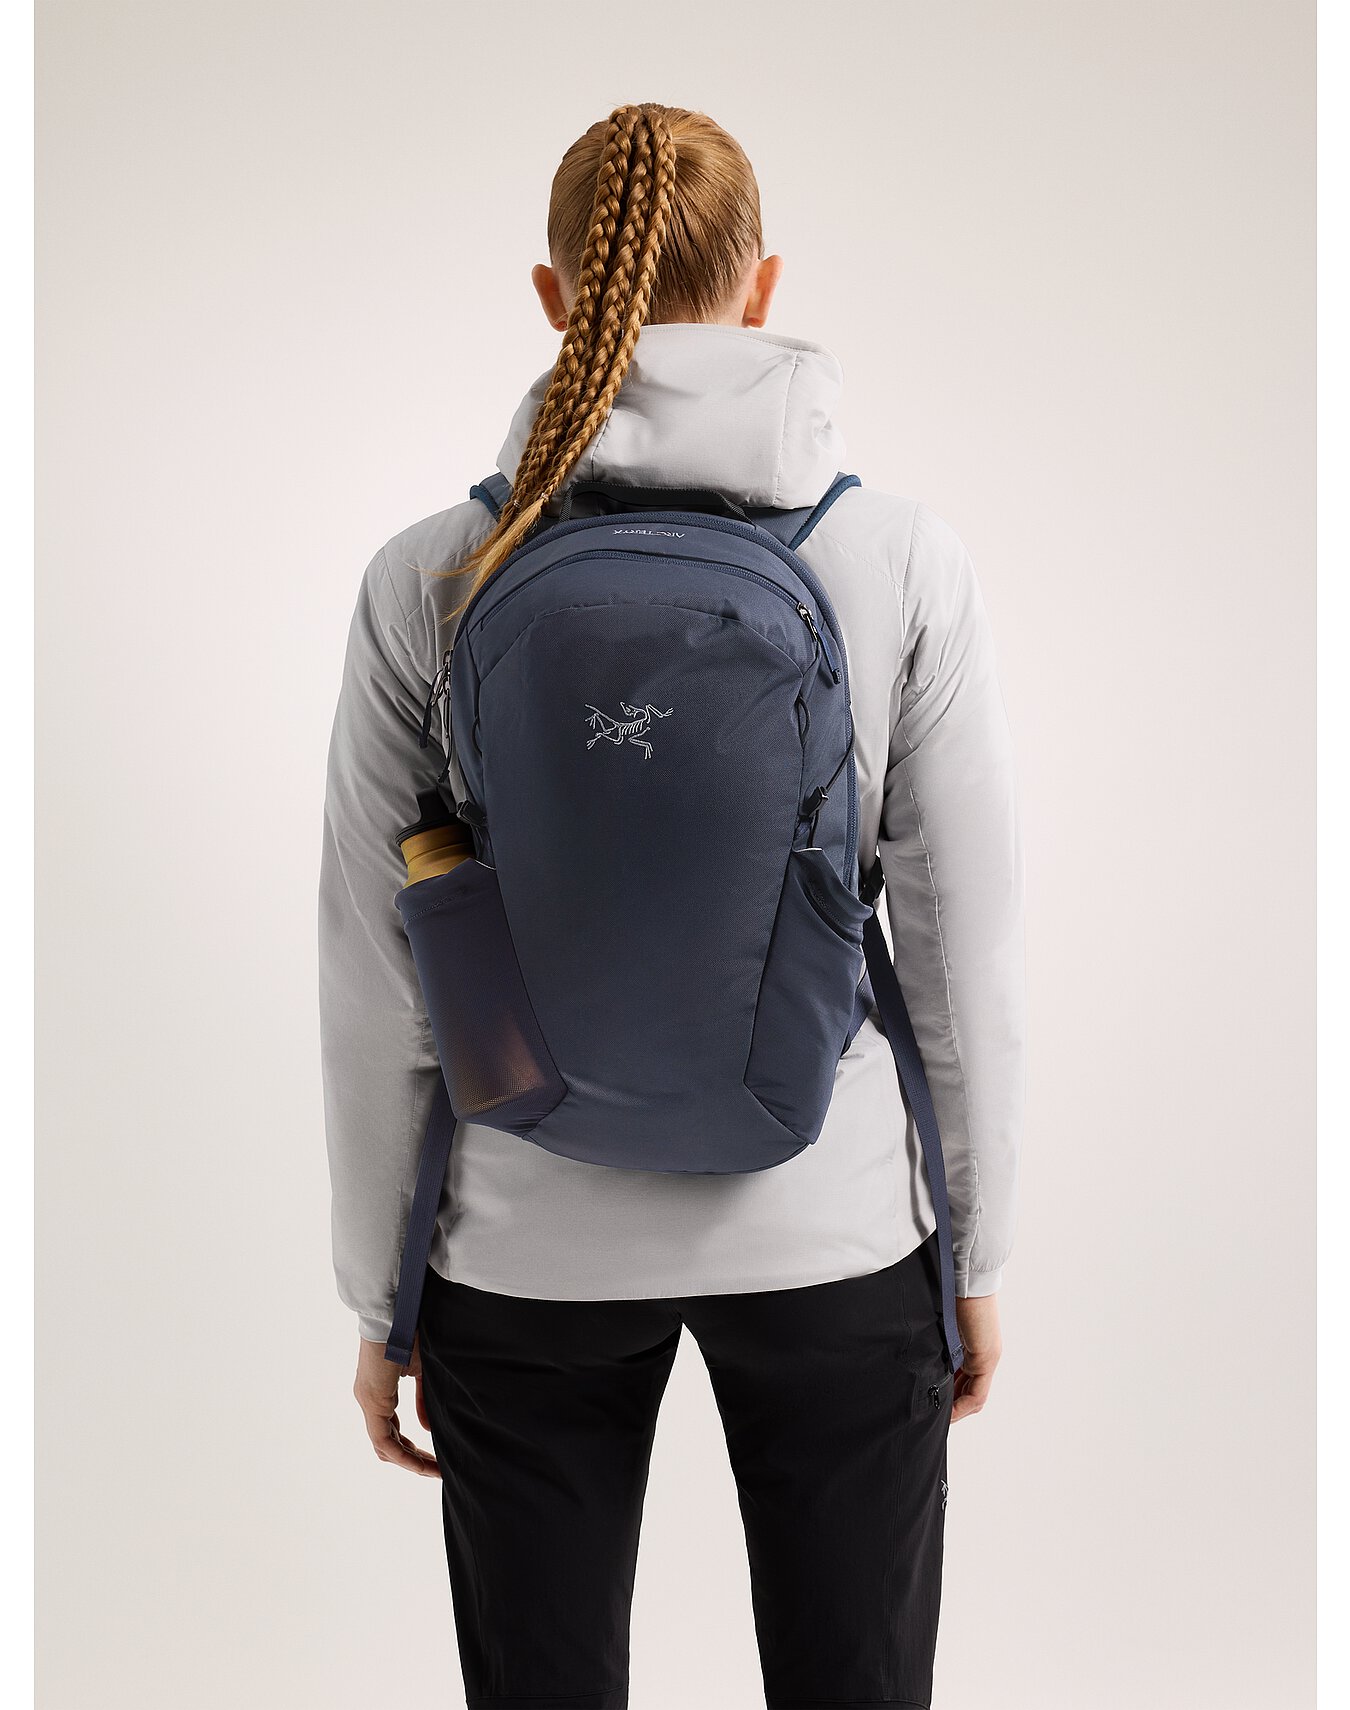 Mantis 16 Backpack | Arc'teryx